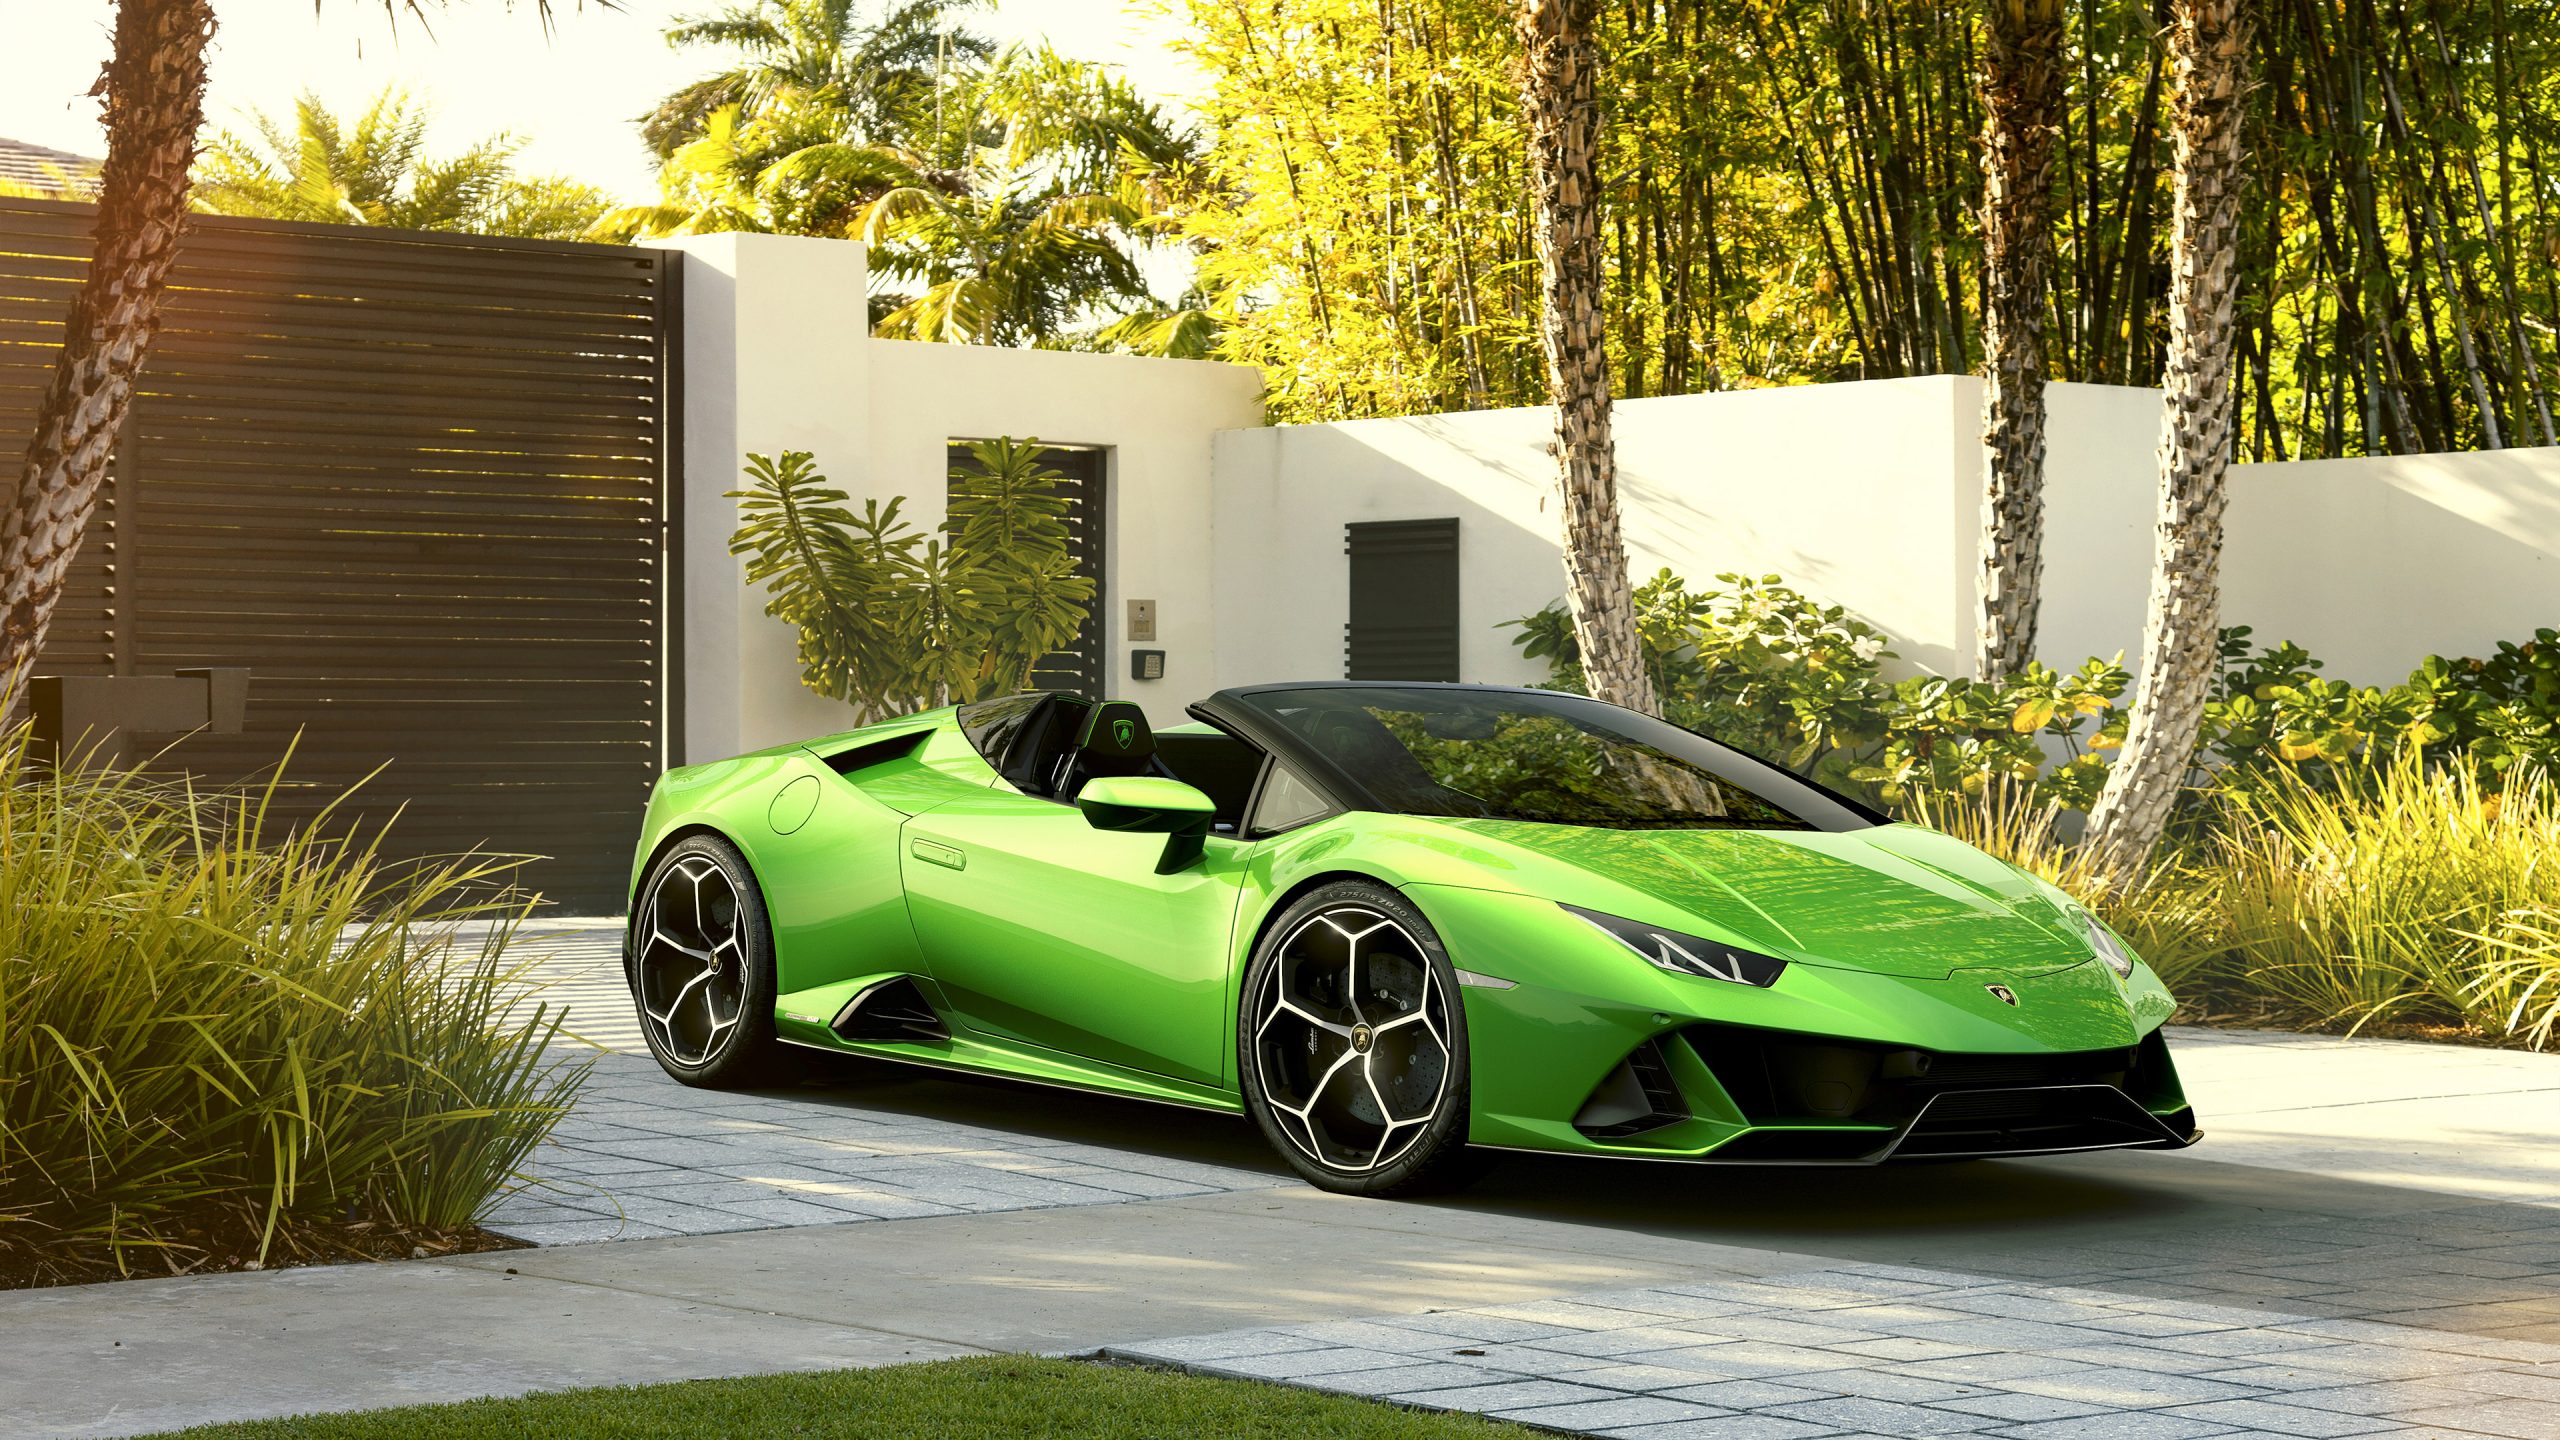 Cool Green Lamborghini Wallpapers